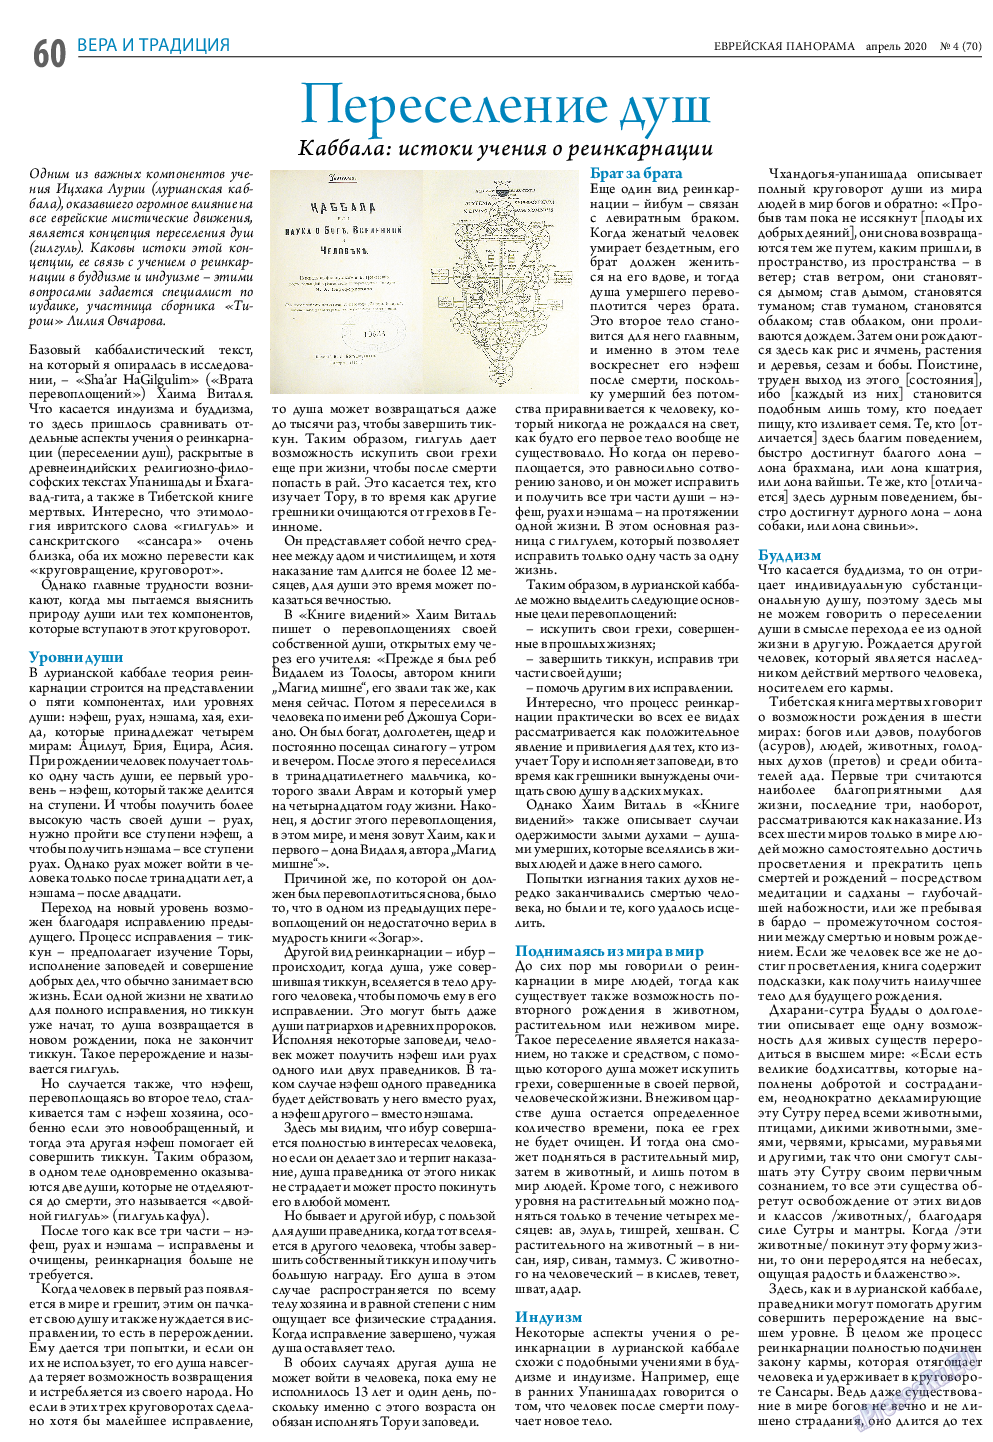 Еврейская панорама, газета. 2020 №4 стр.60